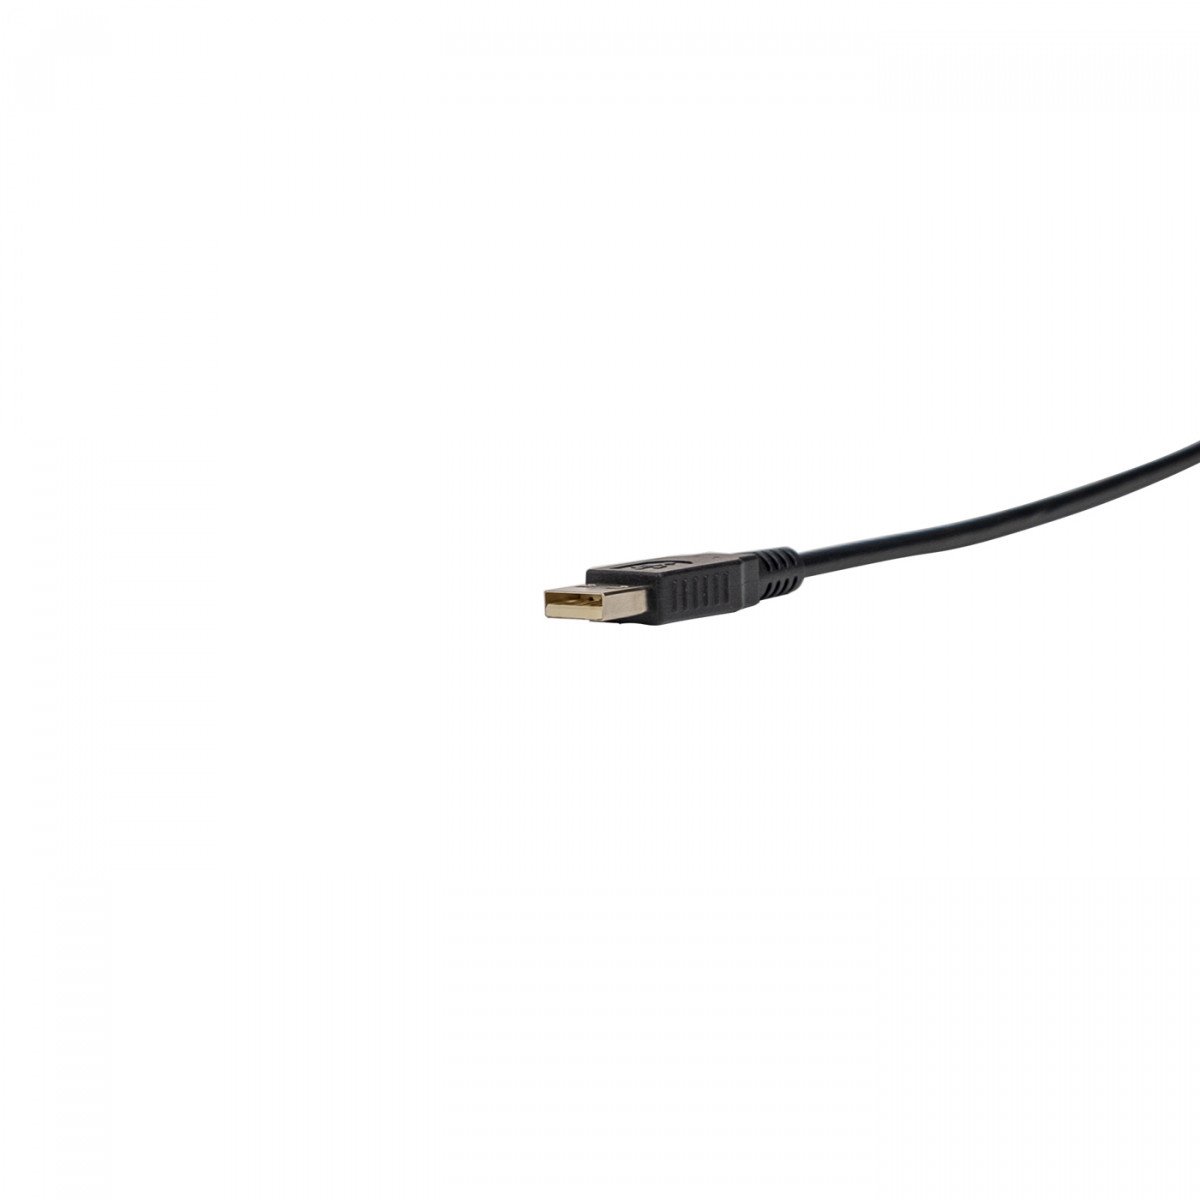 SEPURA speaker1/ I/O/ USB slave cable for SCG, USB 2.0 USB programming/data cable 300-02013